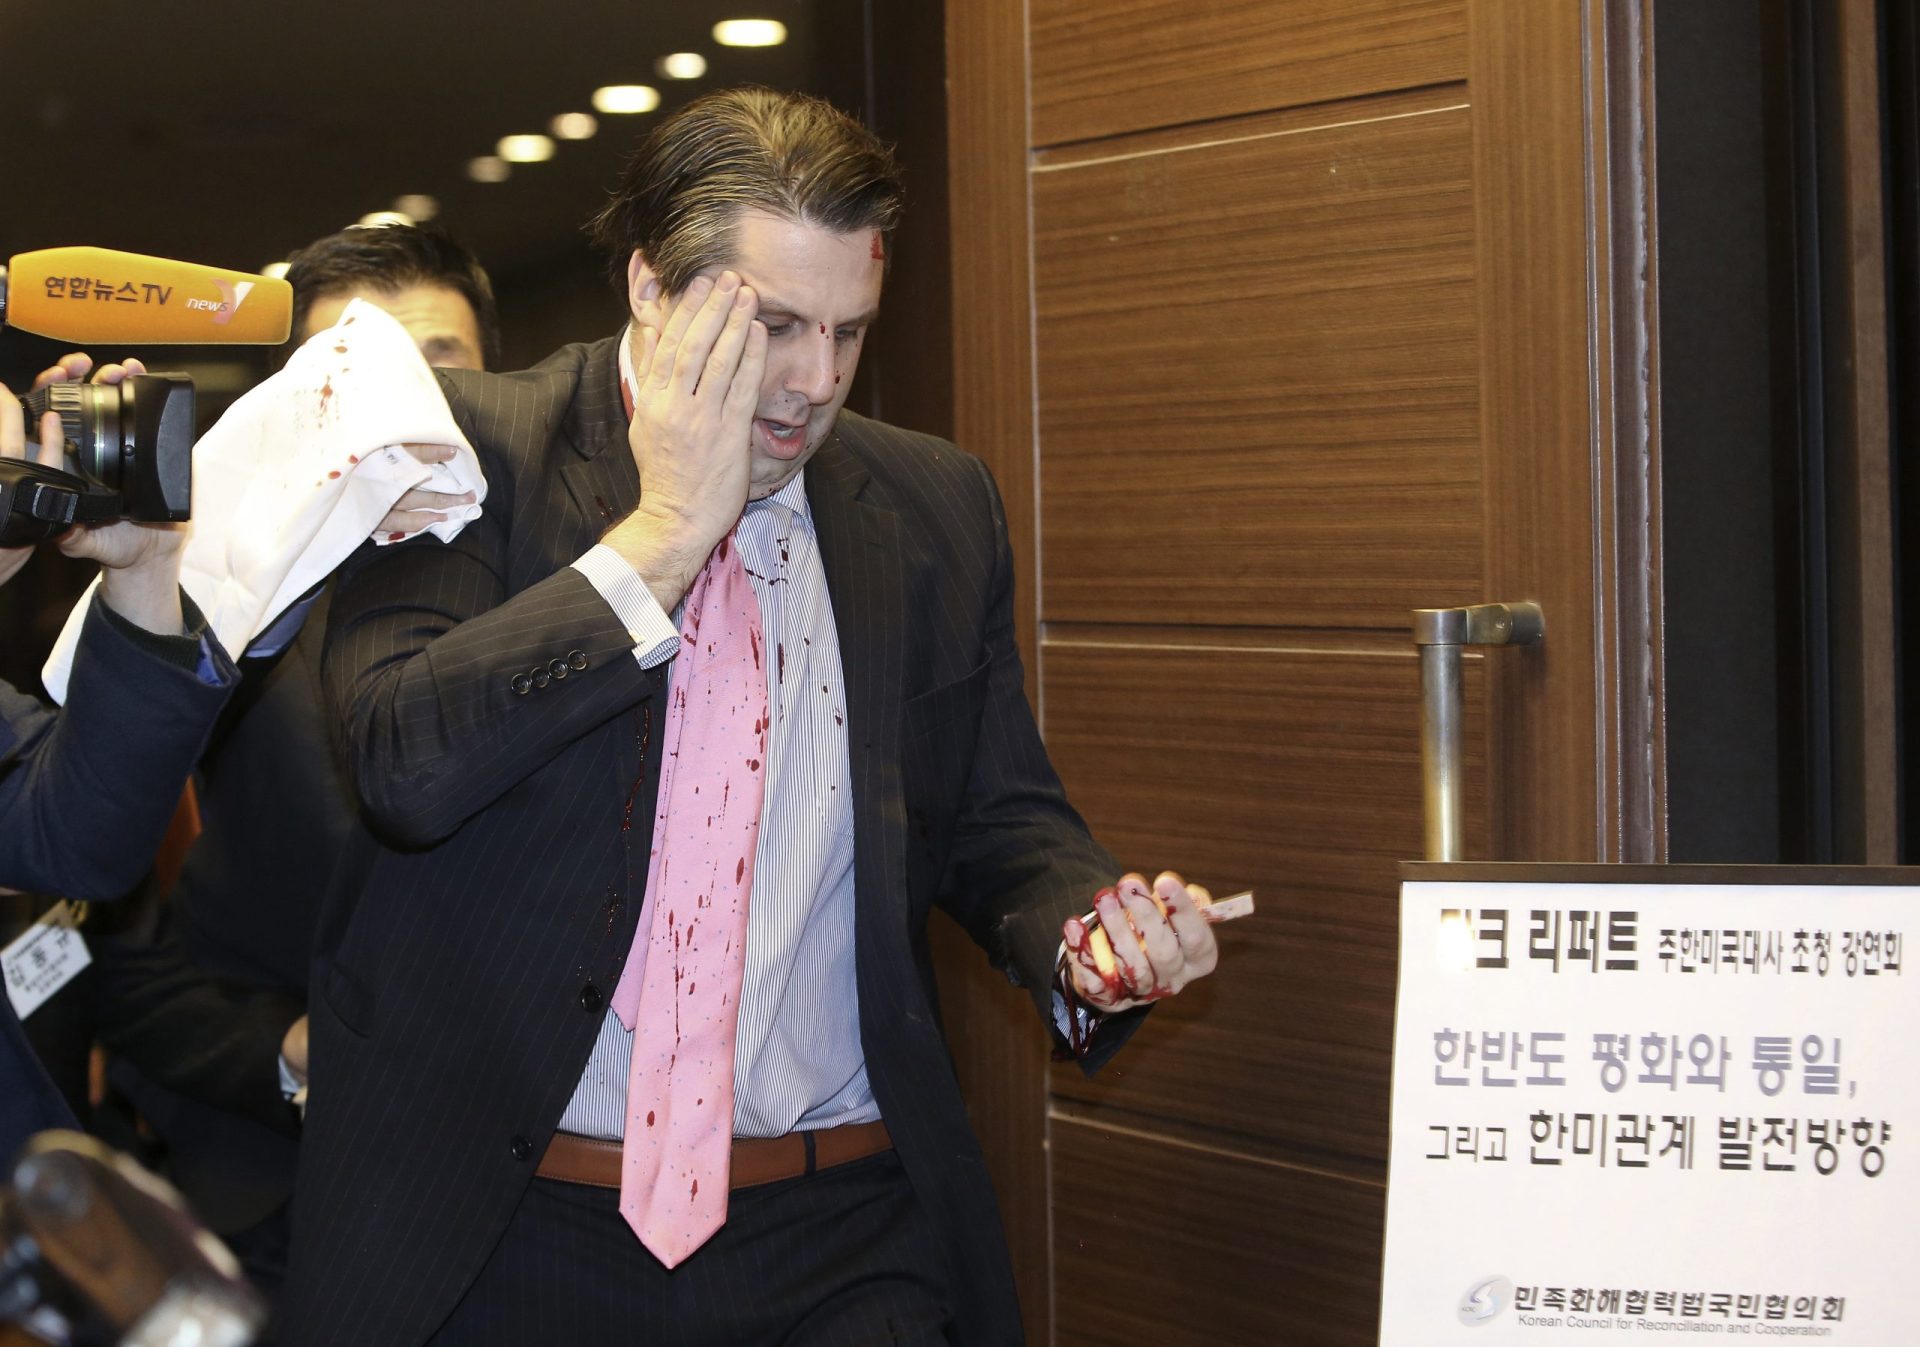 Embaixador norte-americano esfaqueado na Coreia do Sul